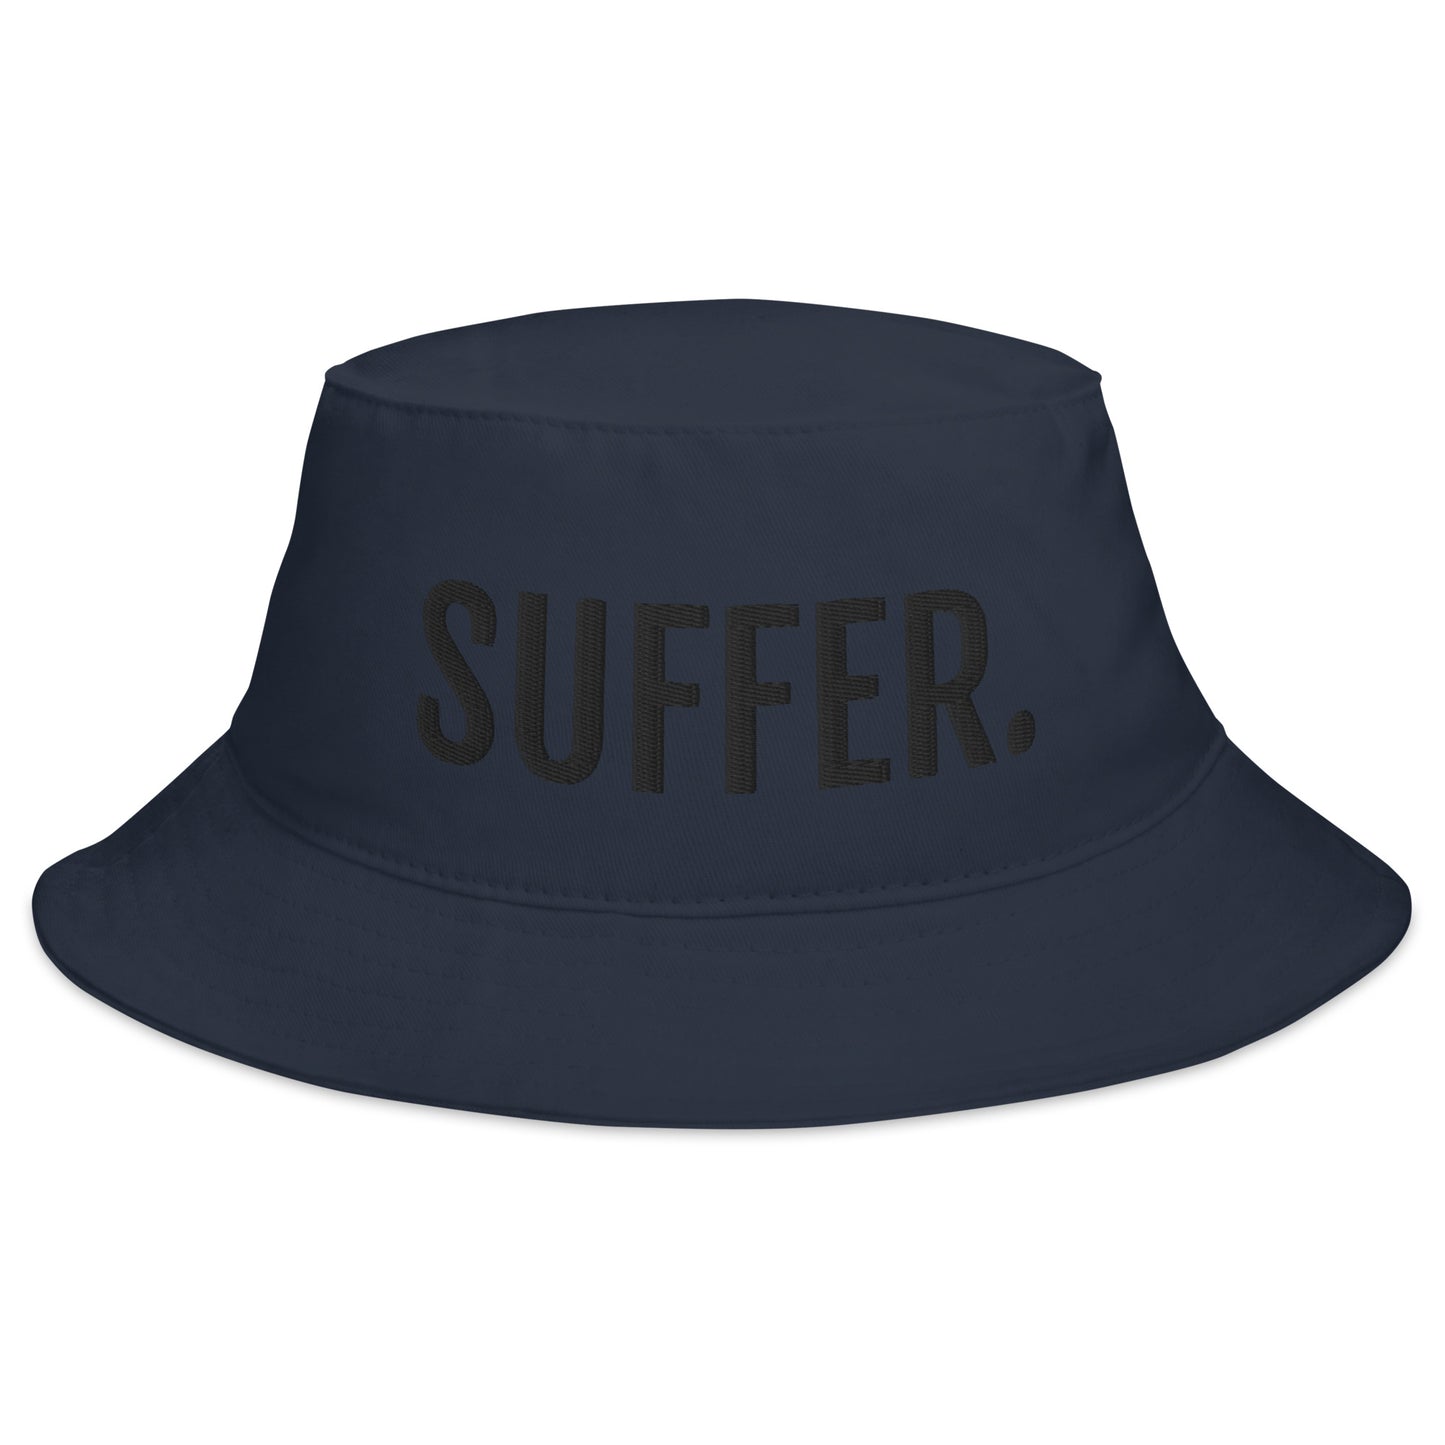 BLK SUFFER. Bucket Hat